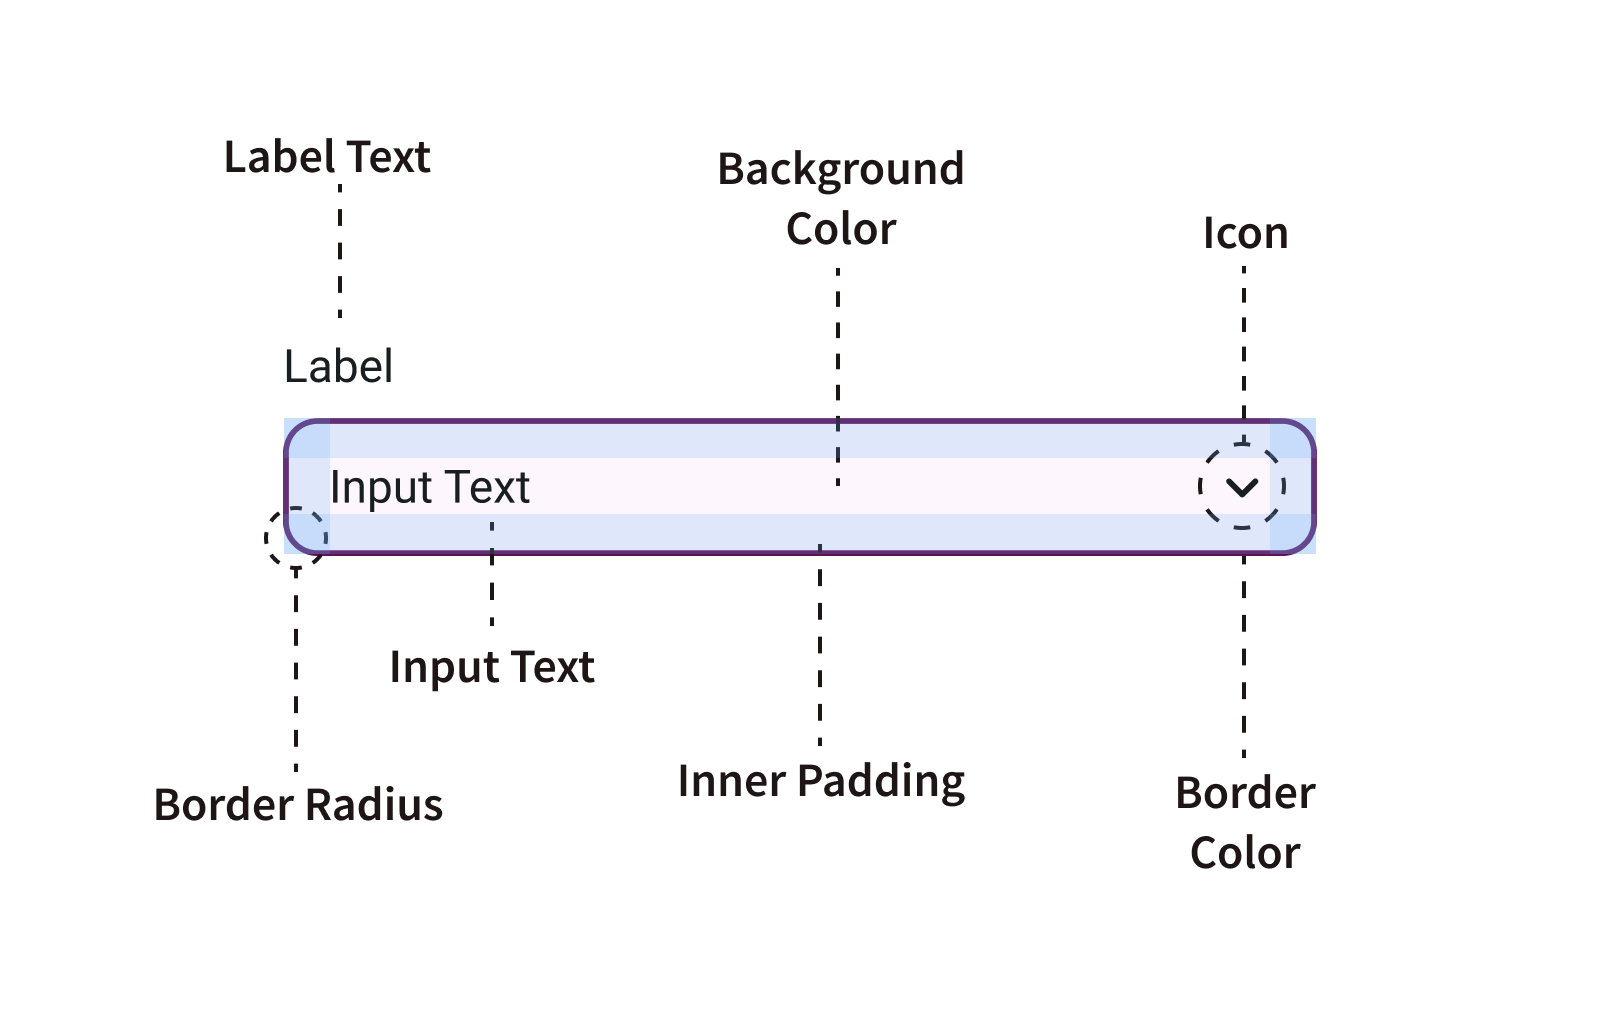 An image analyzing a custom input field